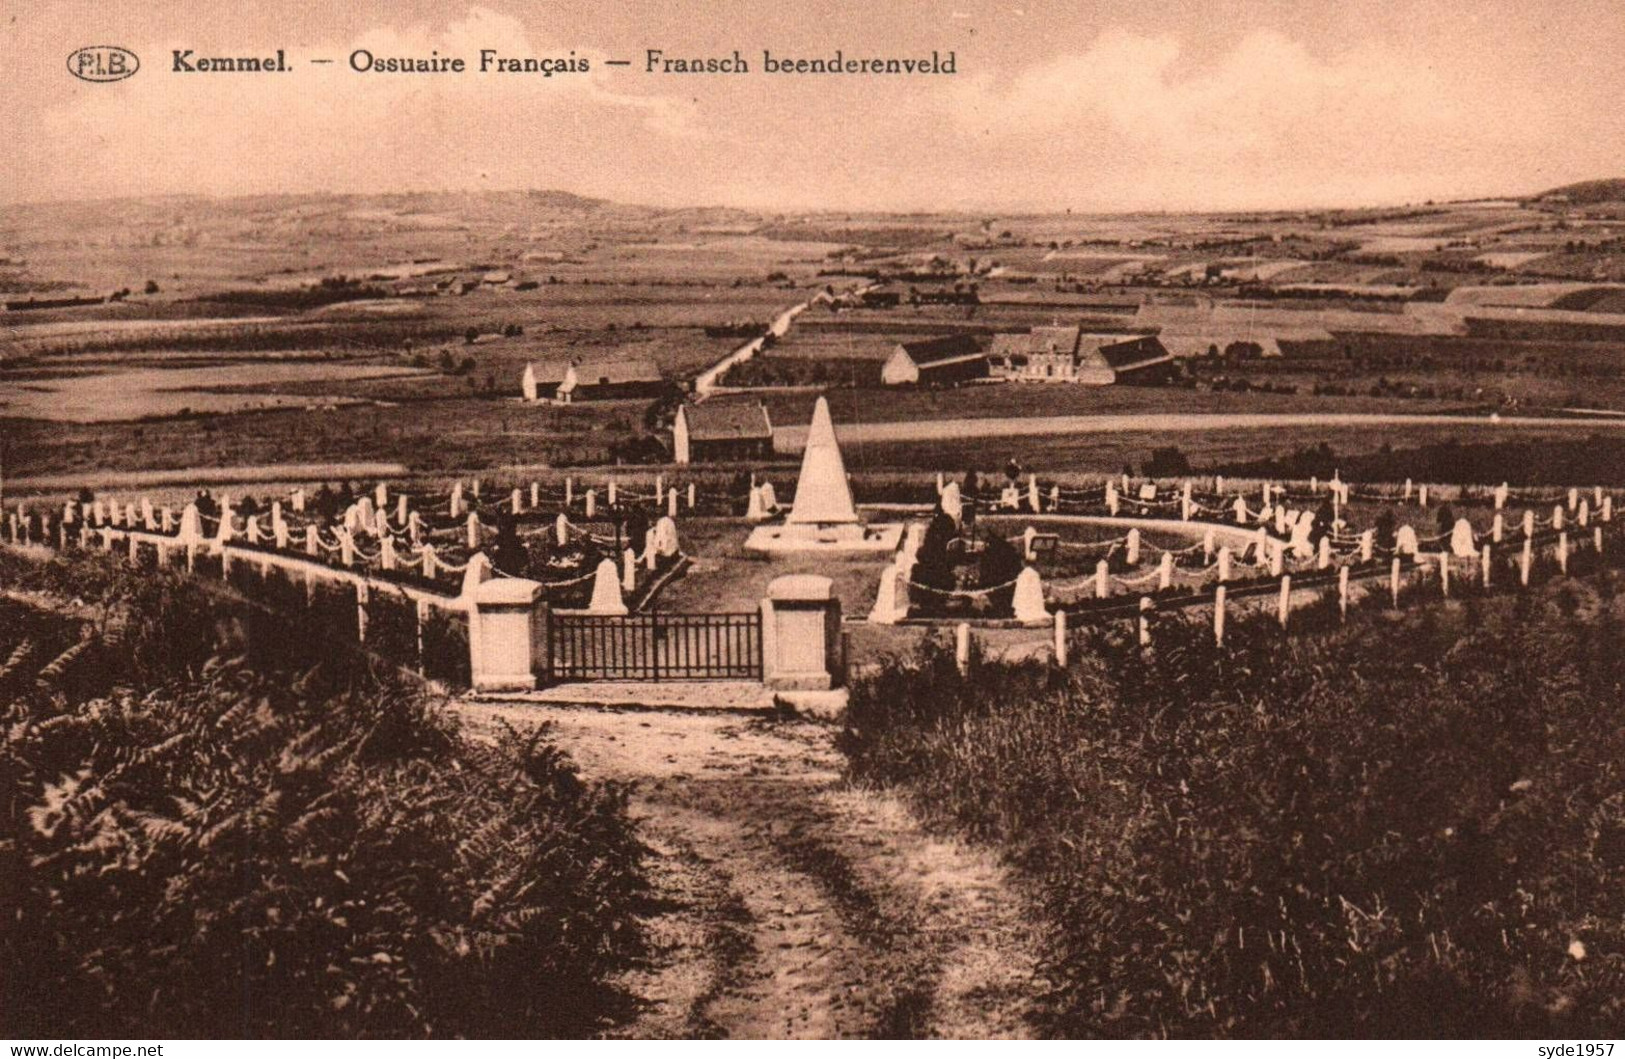 Kemmel - Ossuaire Français - Heuvelland